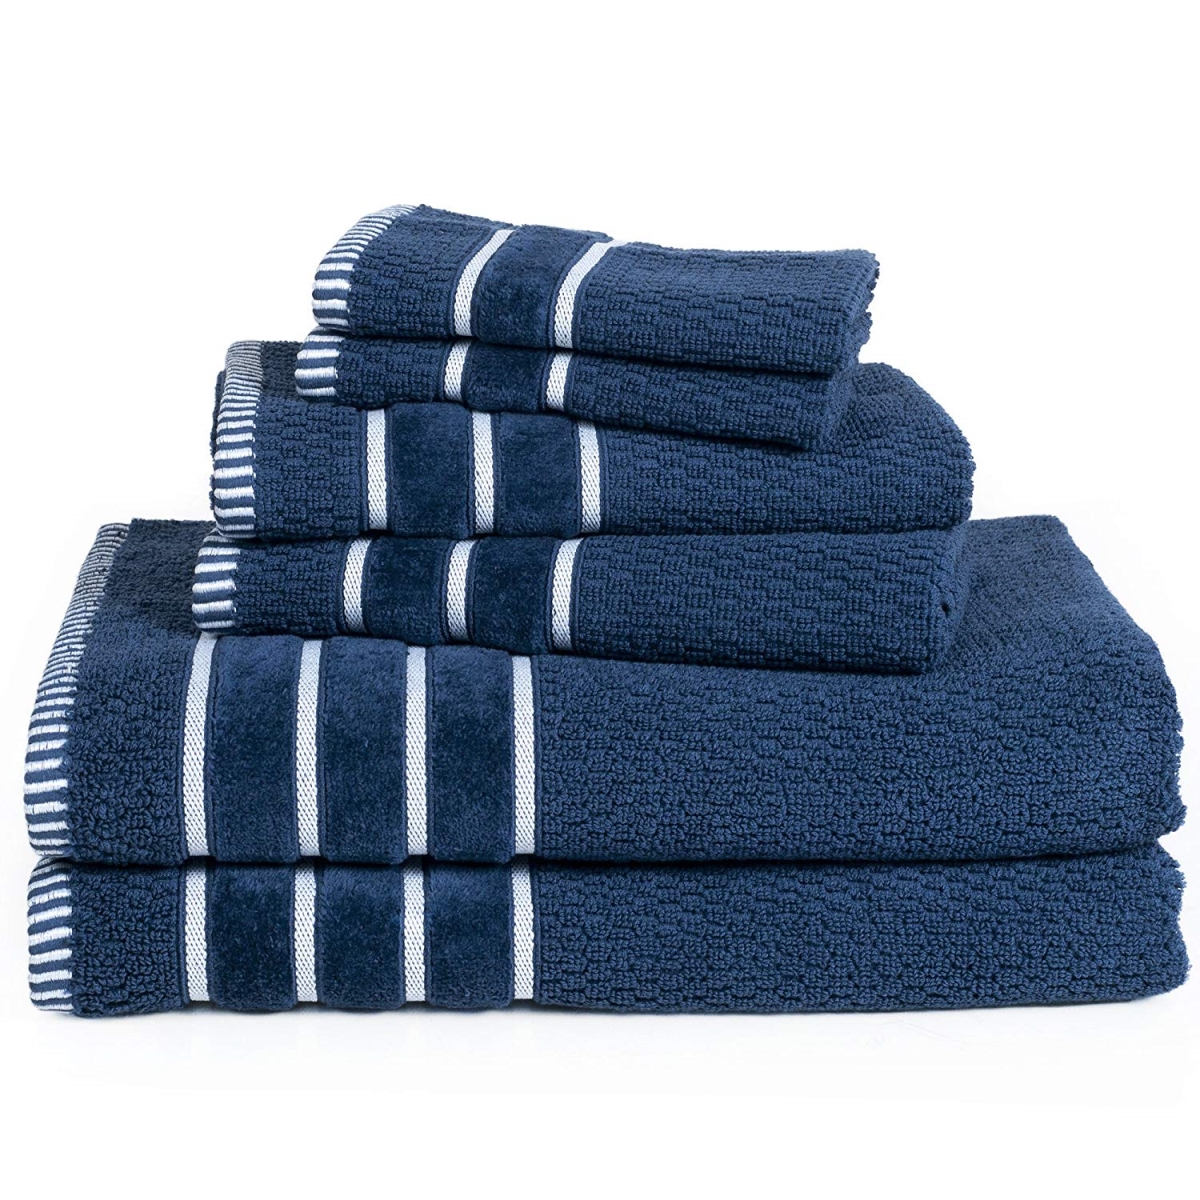 67a-74186 Home 100 Percent Cotton Rice Weave 6 Piece Towel Set - Navy